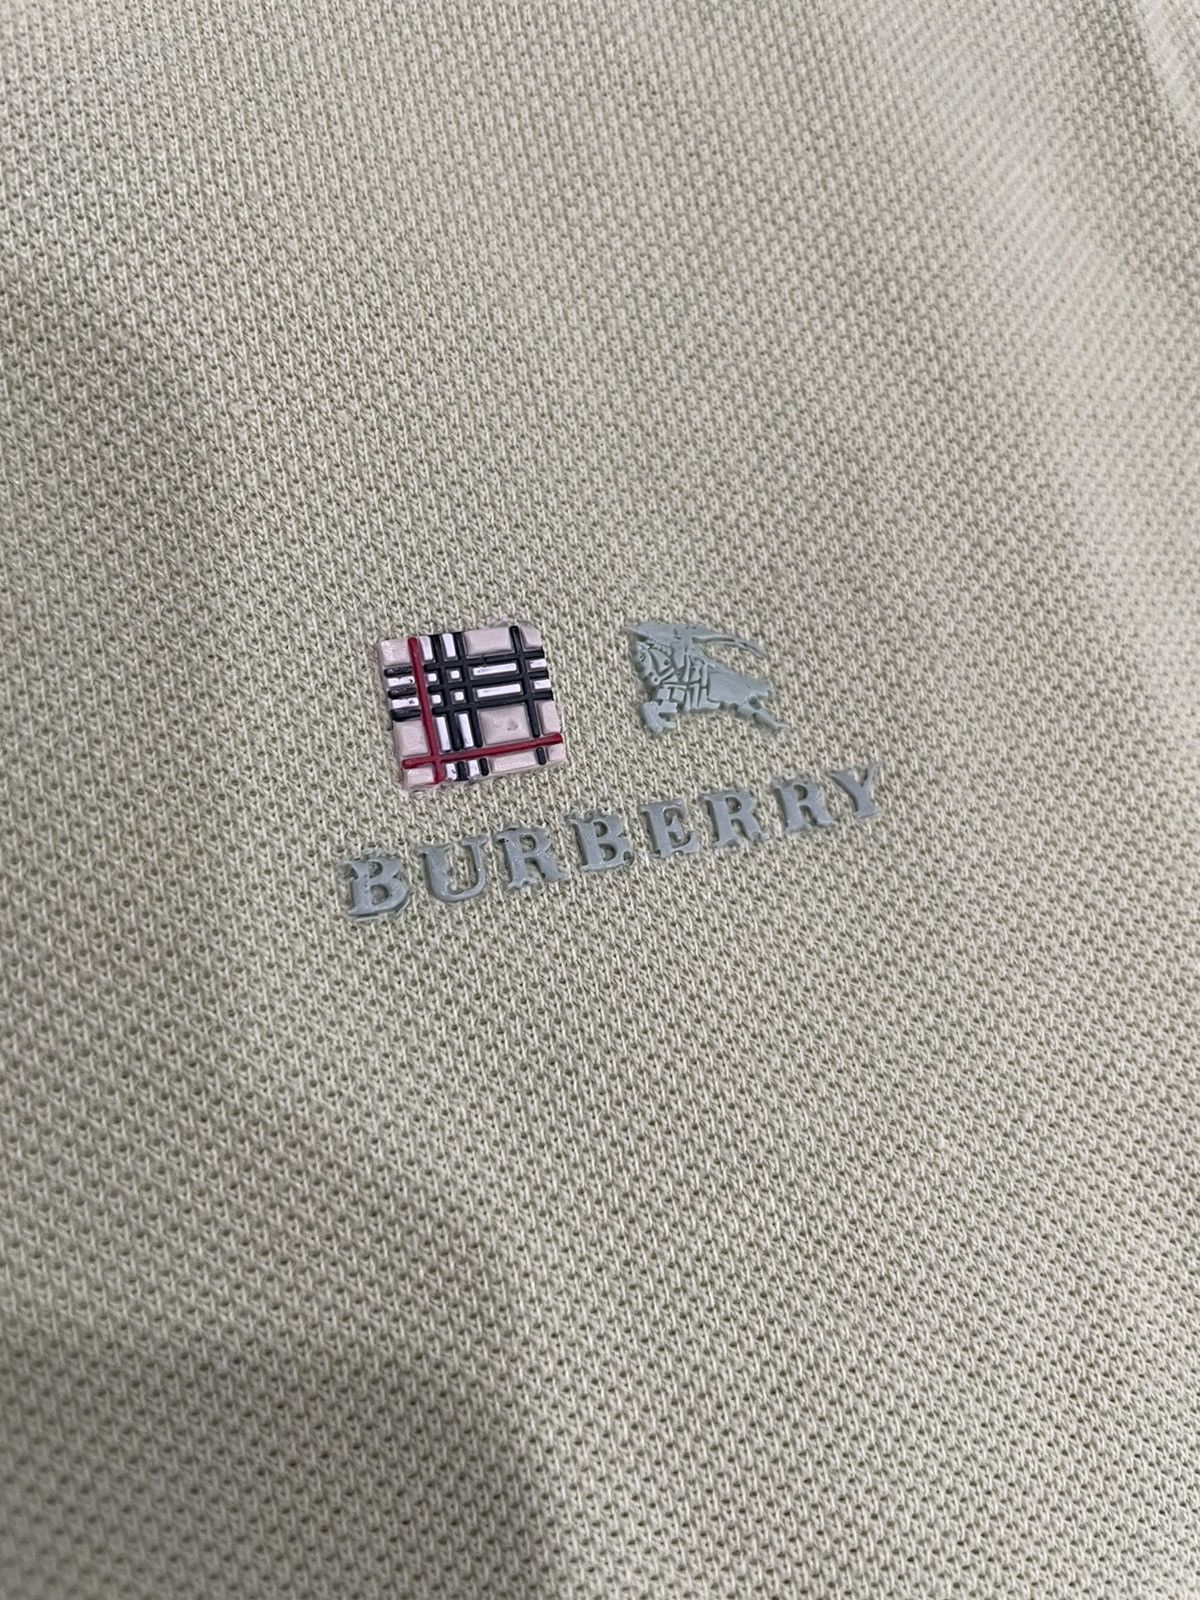 Burberry Burberry London green polo shirt men’s size xxl Size US XXL / EU 58 / 5 - 6 Thumbnail